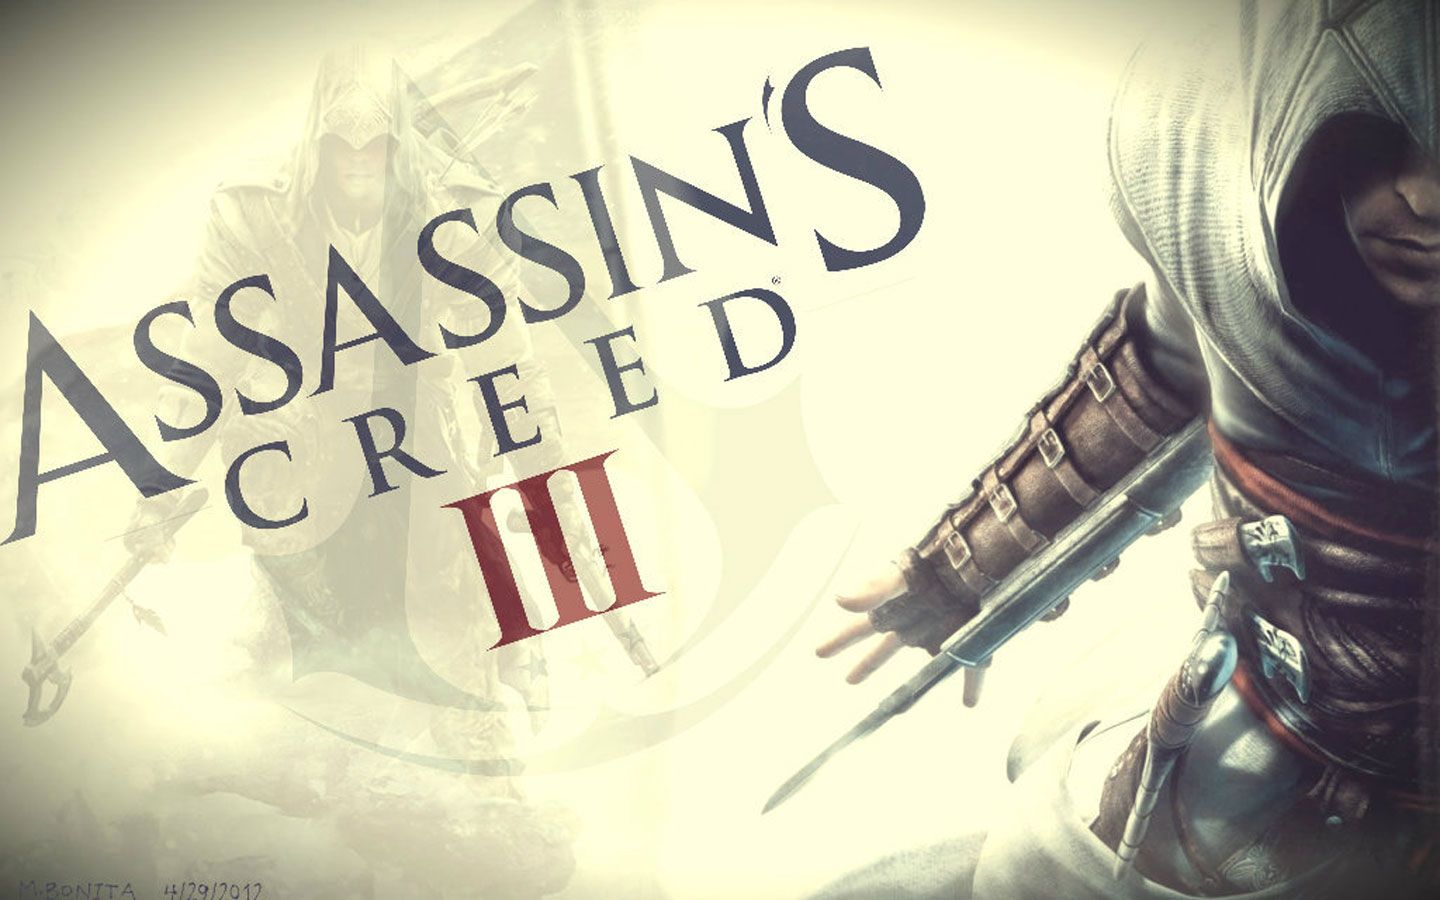 Assassin's Creed 3 - The Assassin's Wallpaper (31733099) - Fanpop